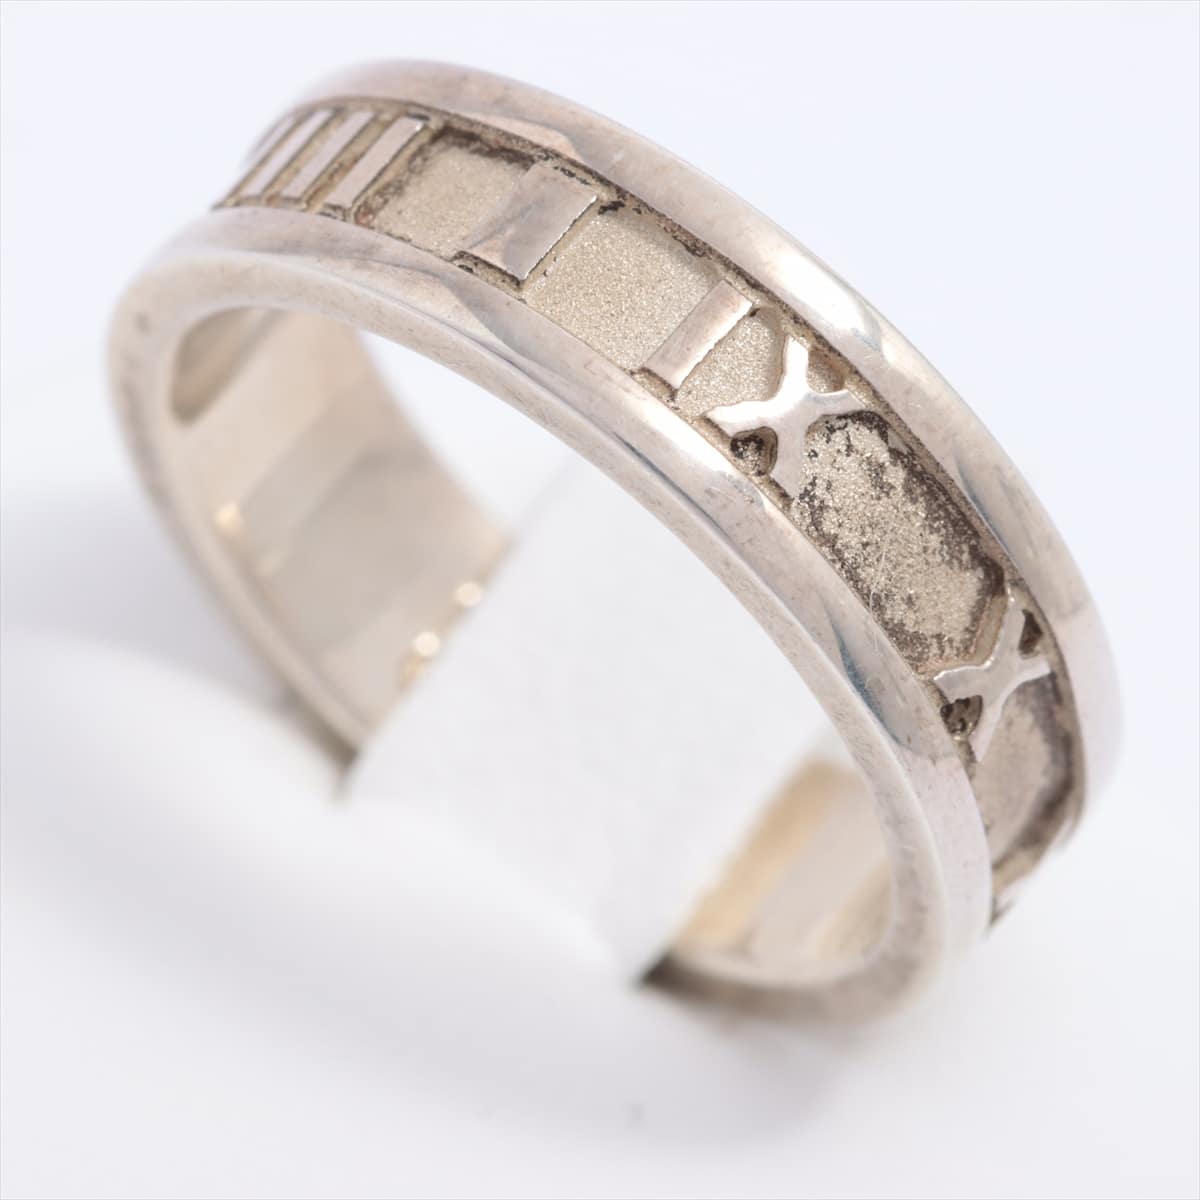 Tiffany Atlas rings 925 6.6g Silver